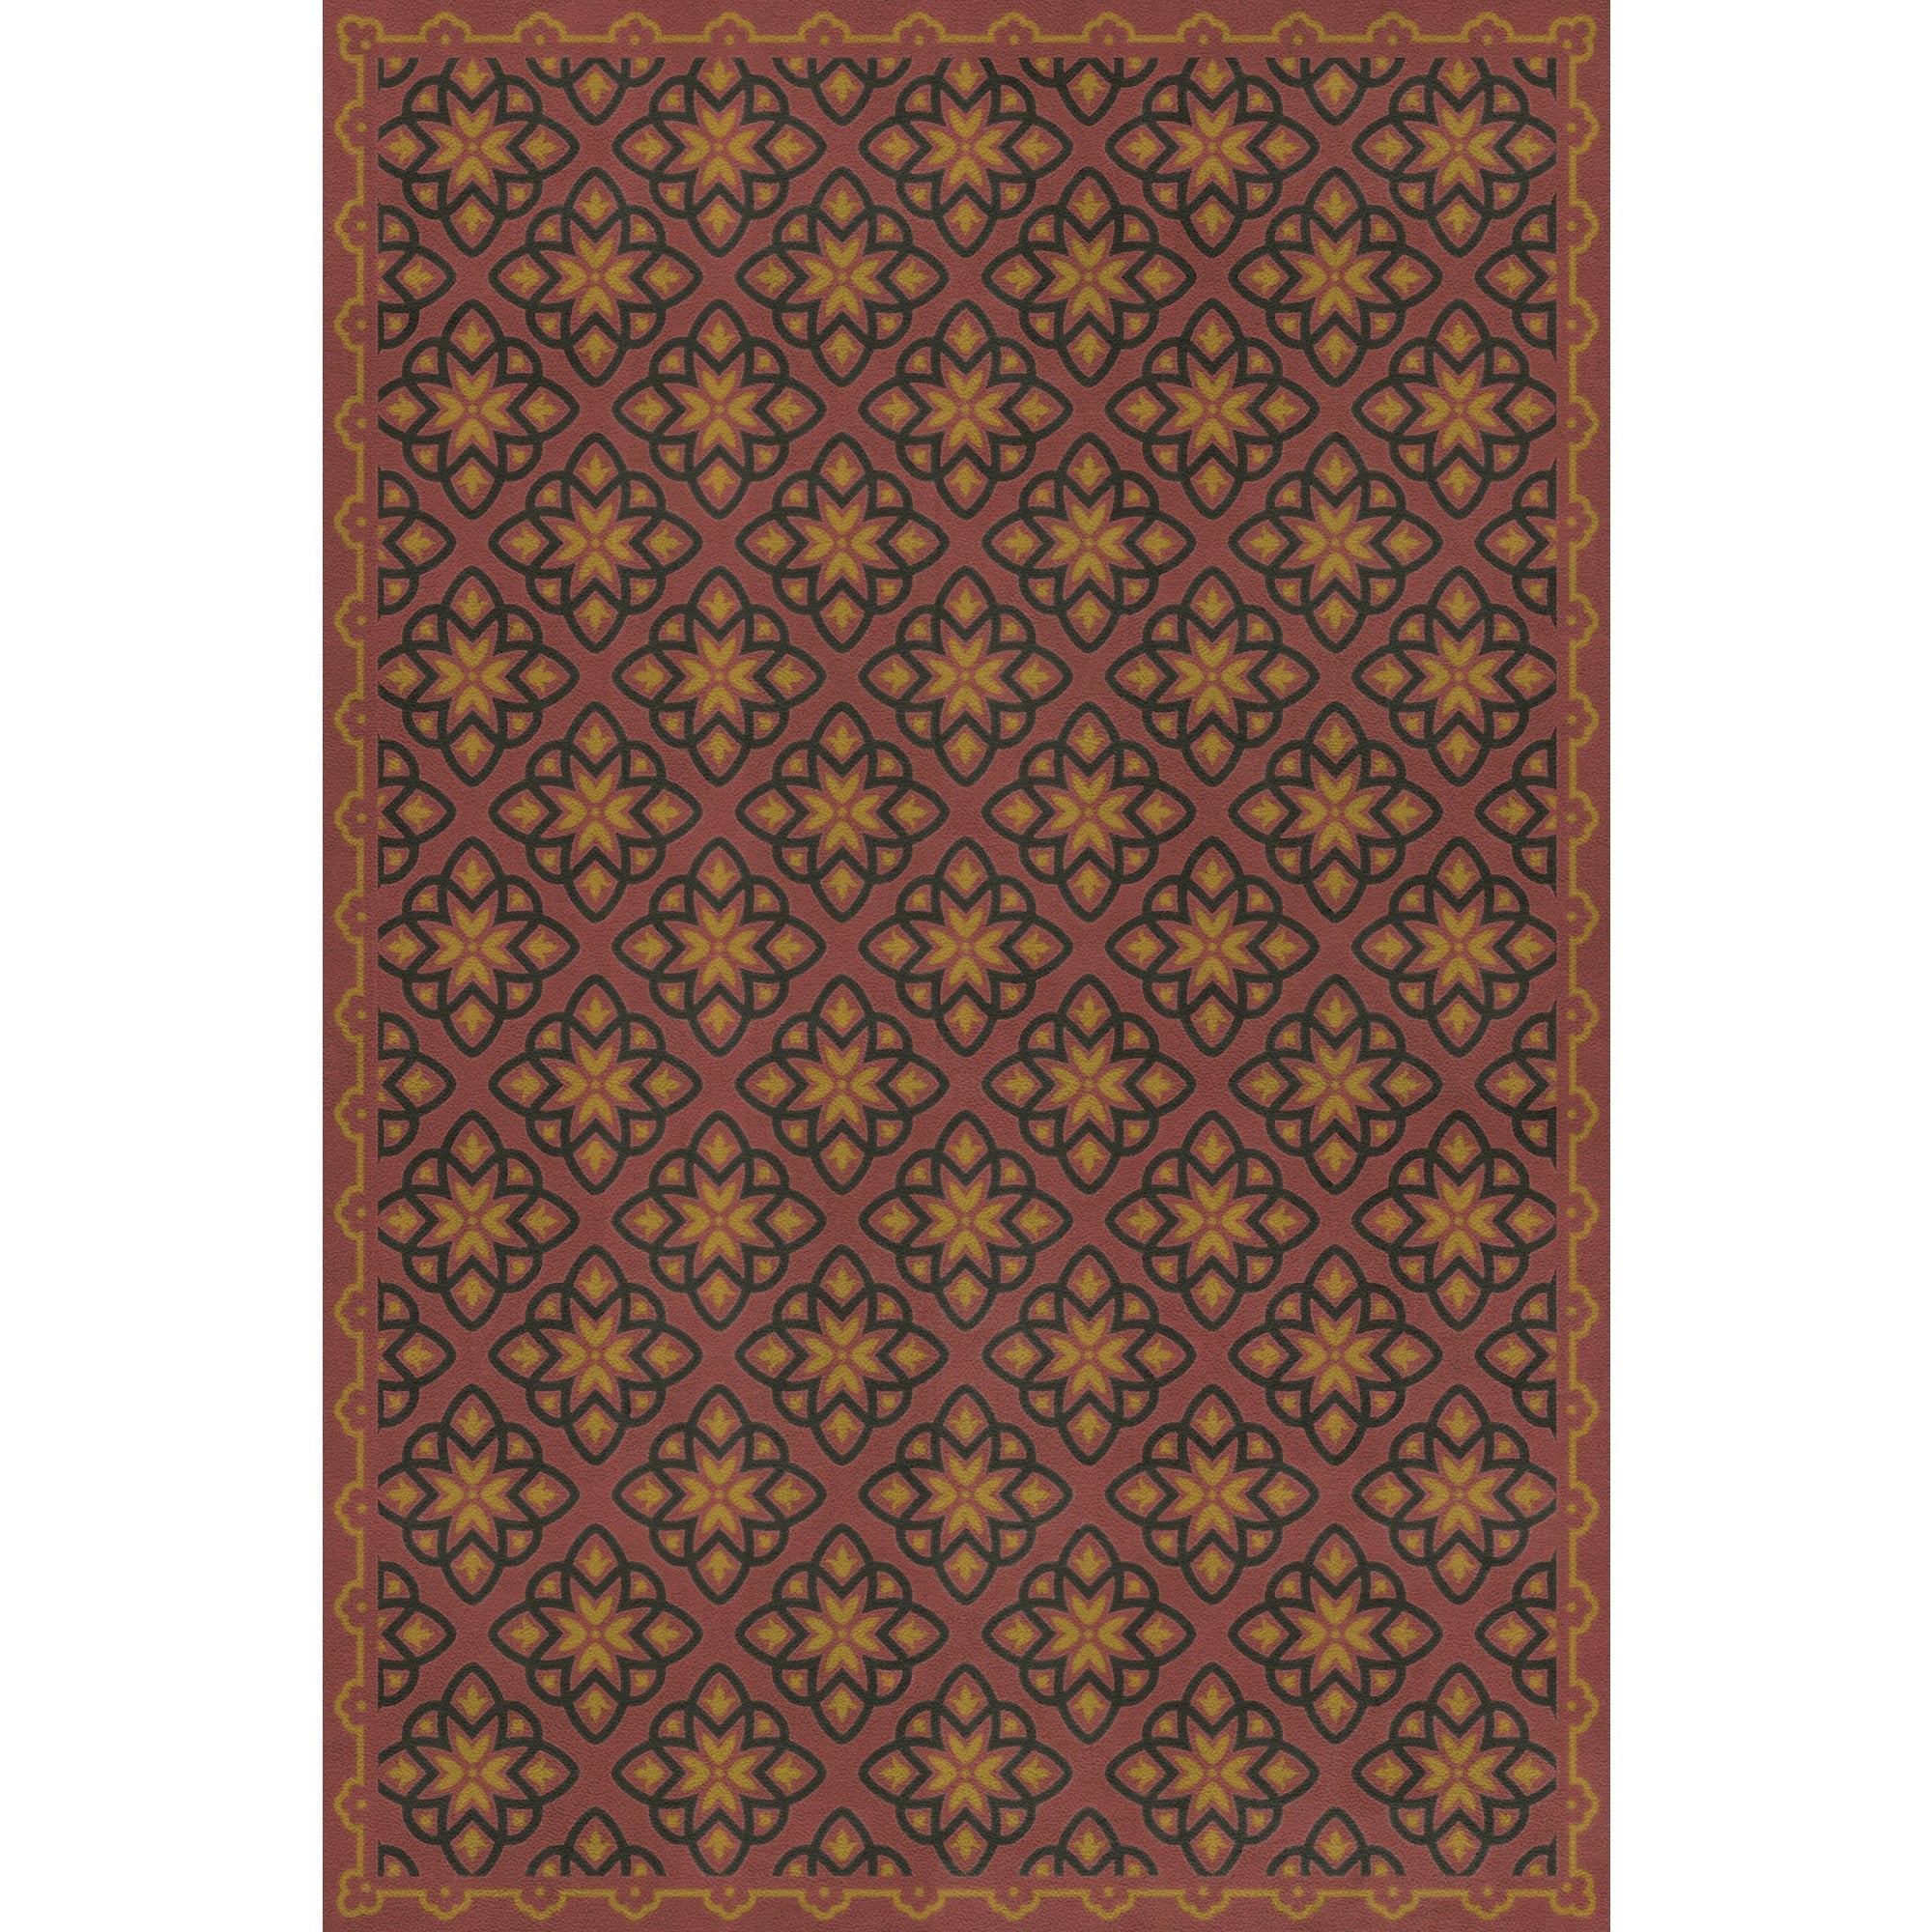 Pattern 45 Rubellus Vinyl Floor Cloth